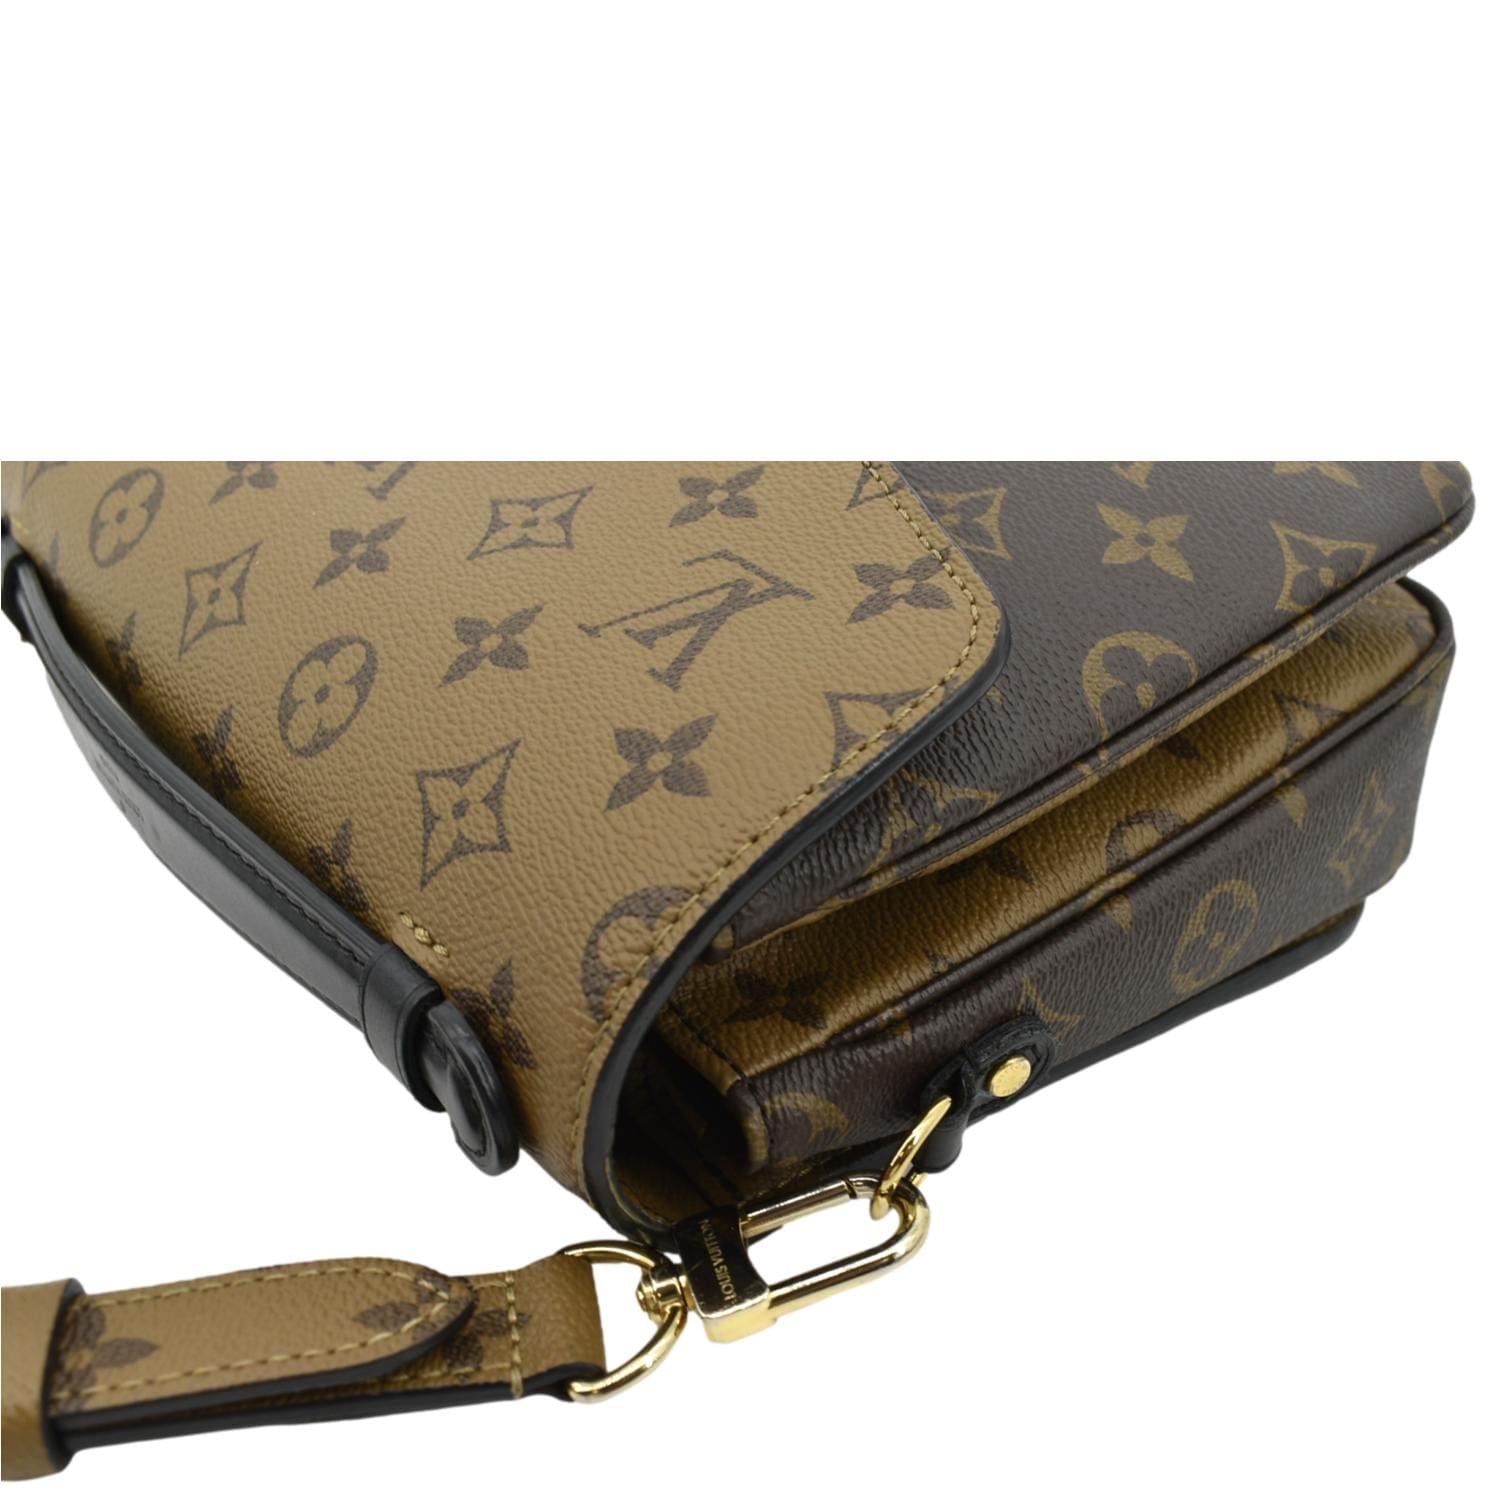 Metis crossbody bag Louis Vuitton Brown in Suede - 29736271